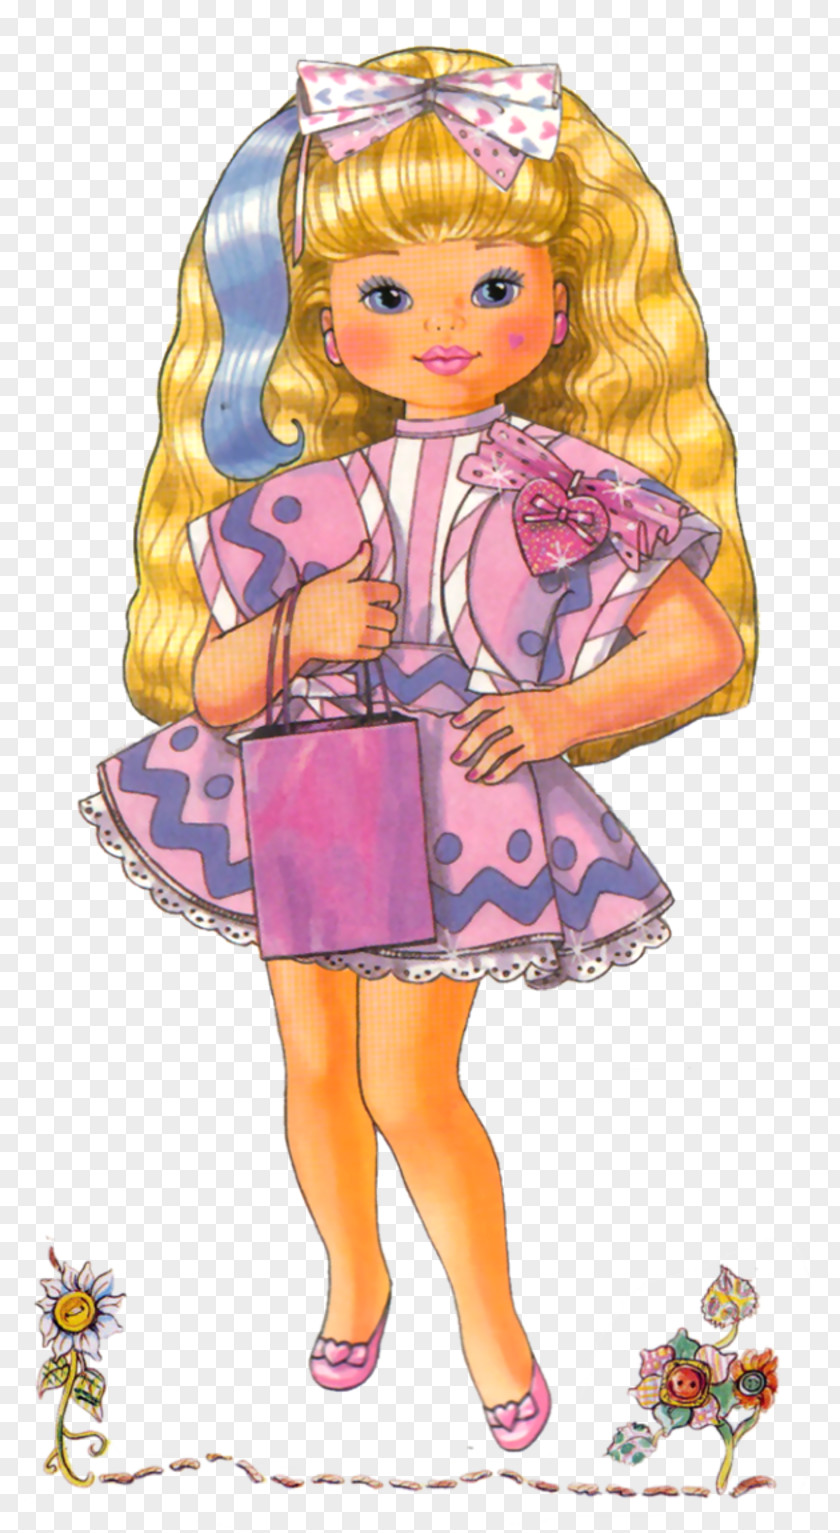 Barbie Cartoon Toddler Character PNG